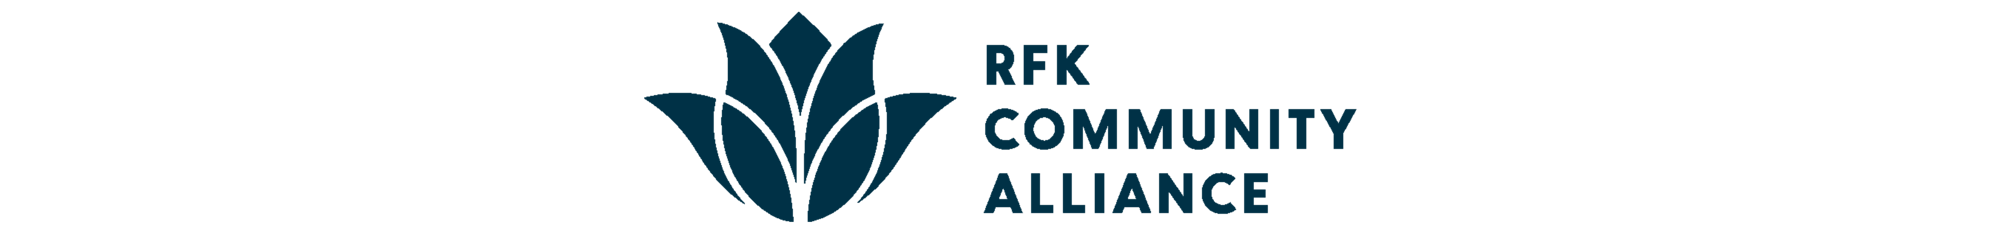 rfk community alliance logo